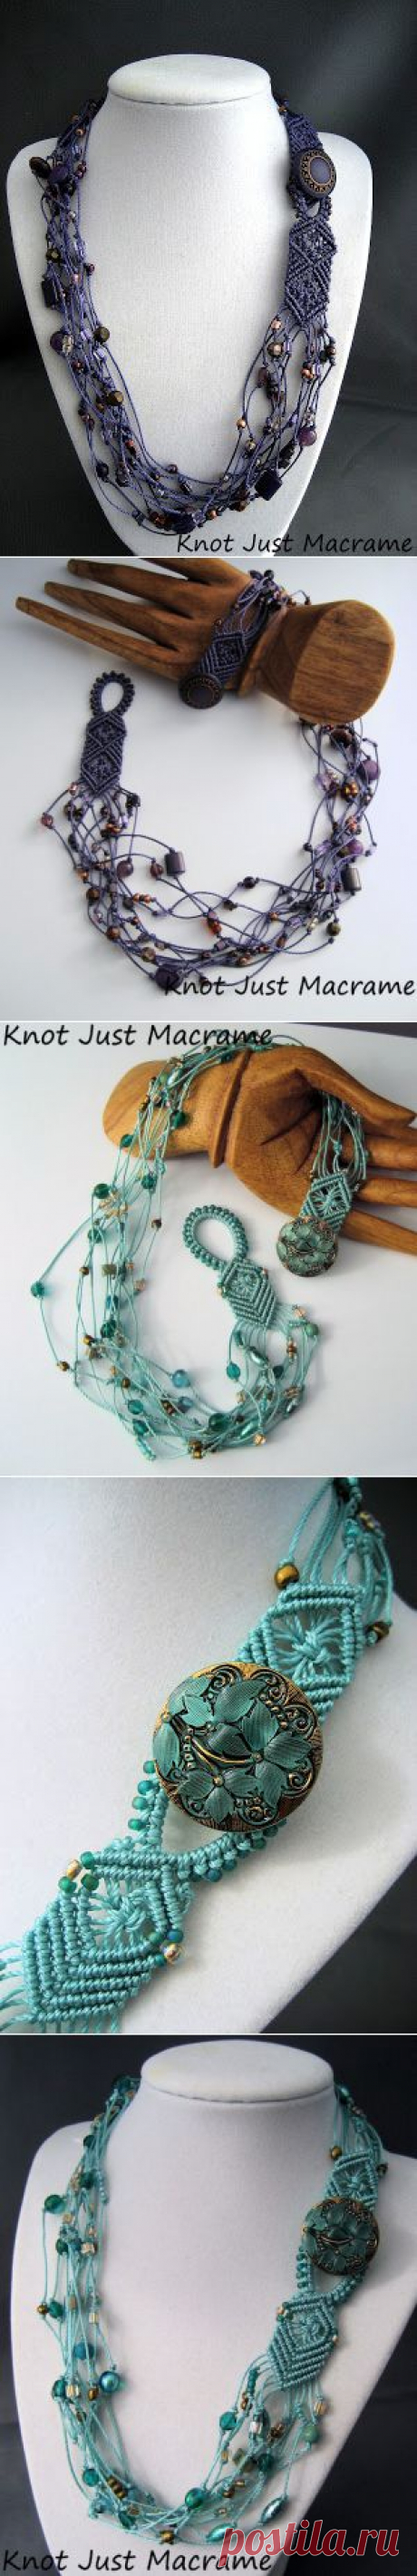 Knot Just Macrame by Sherri Stokey: Beaded Macrame Necklaces